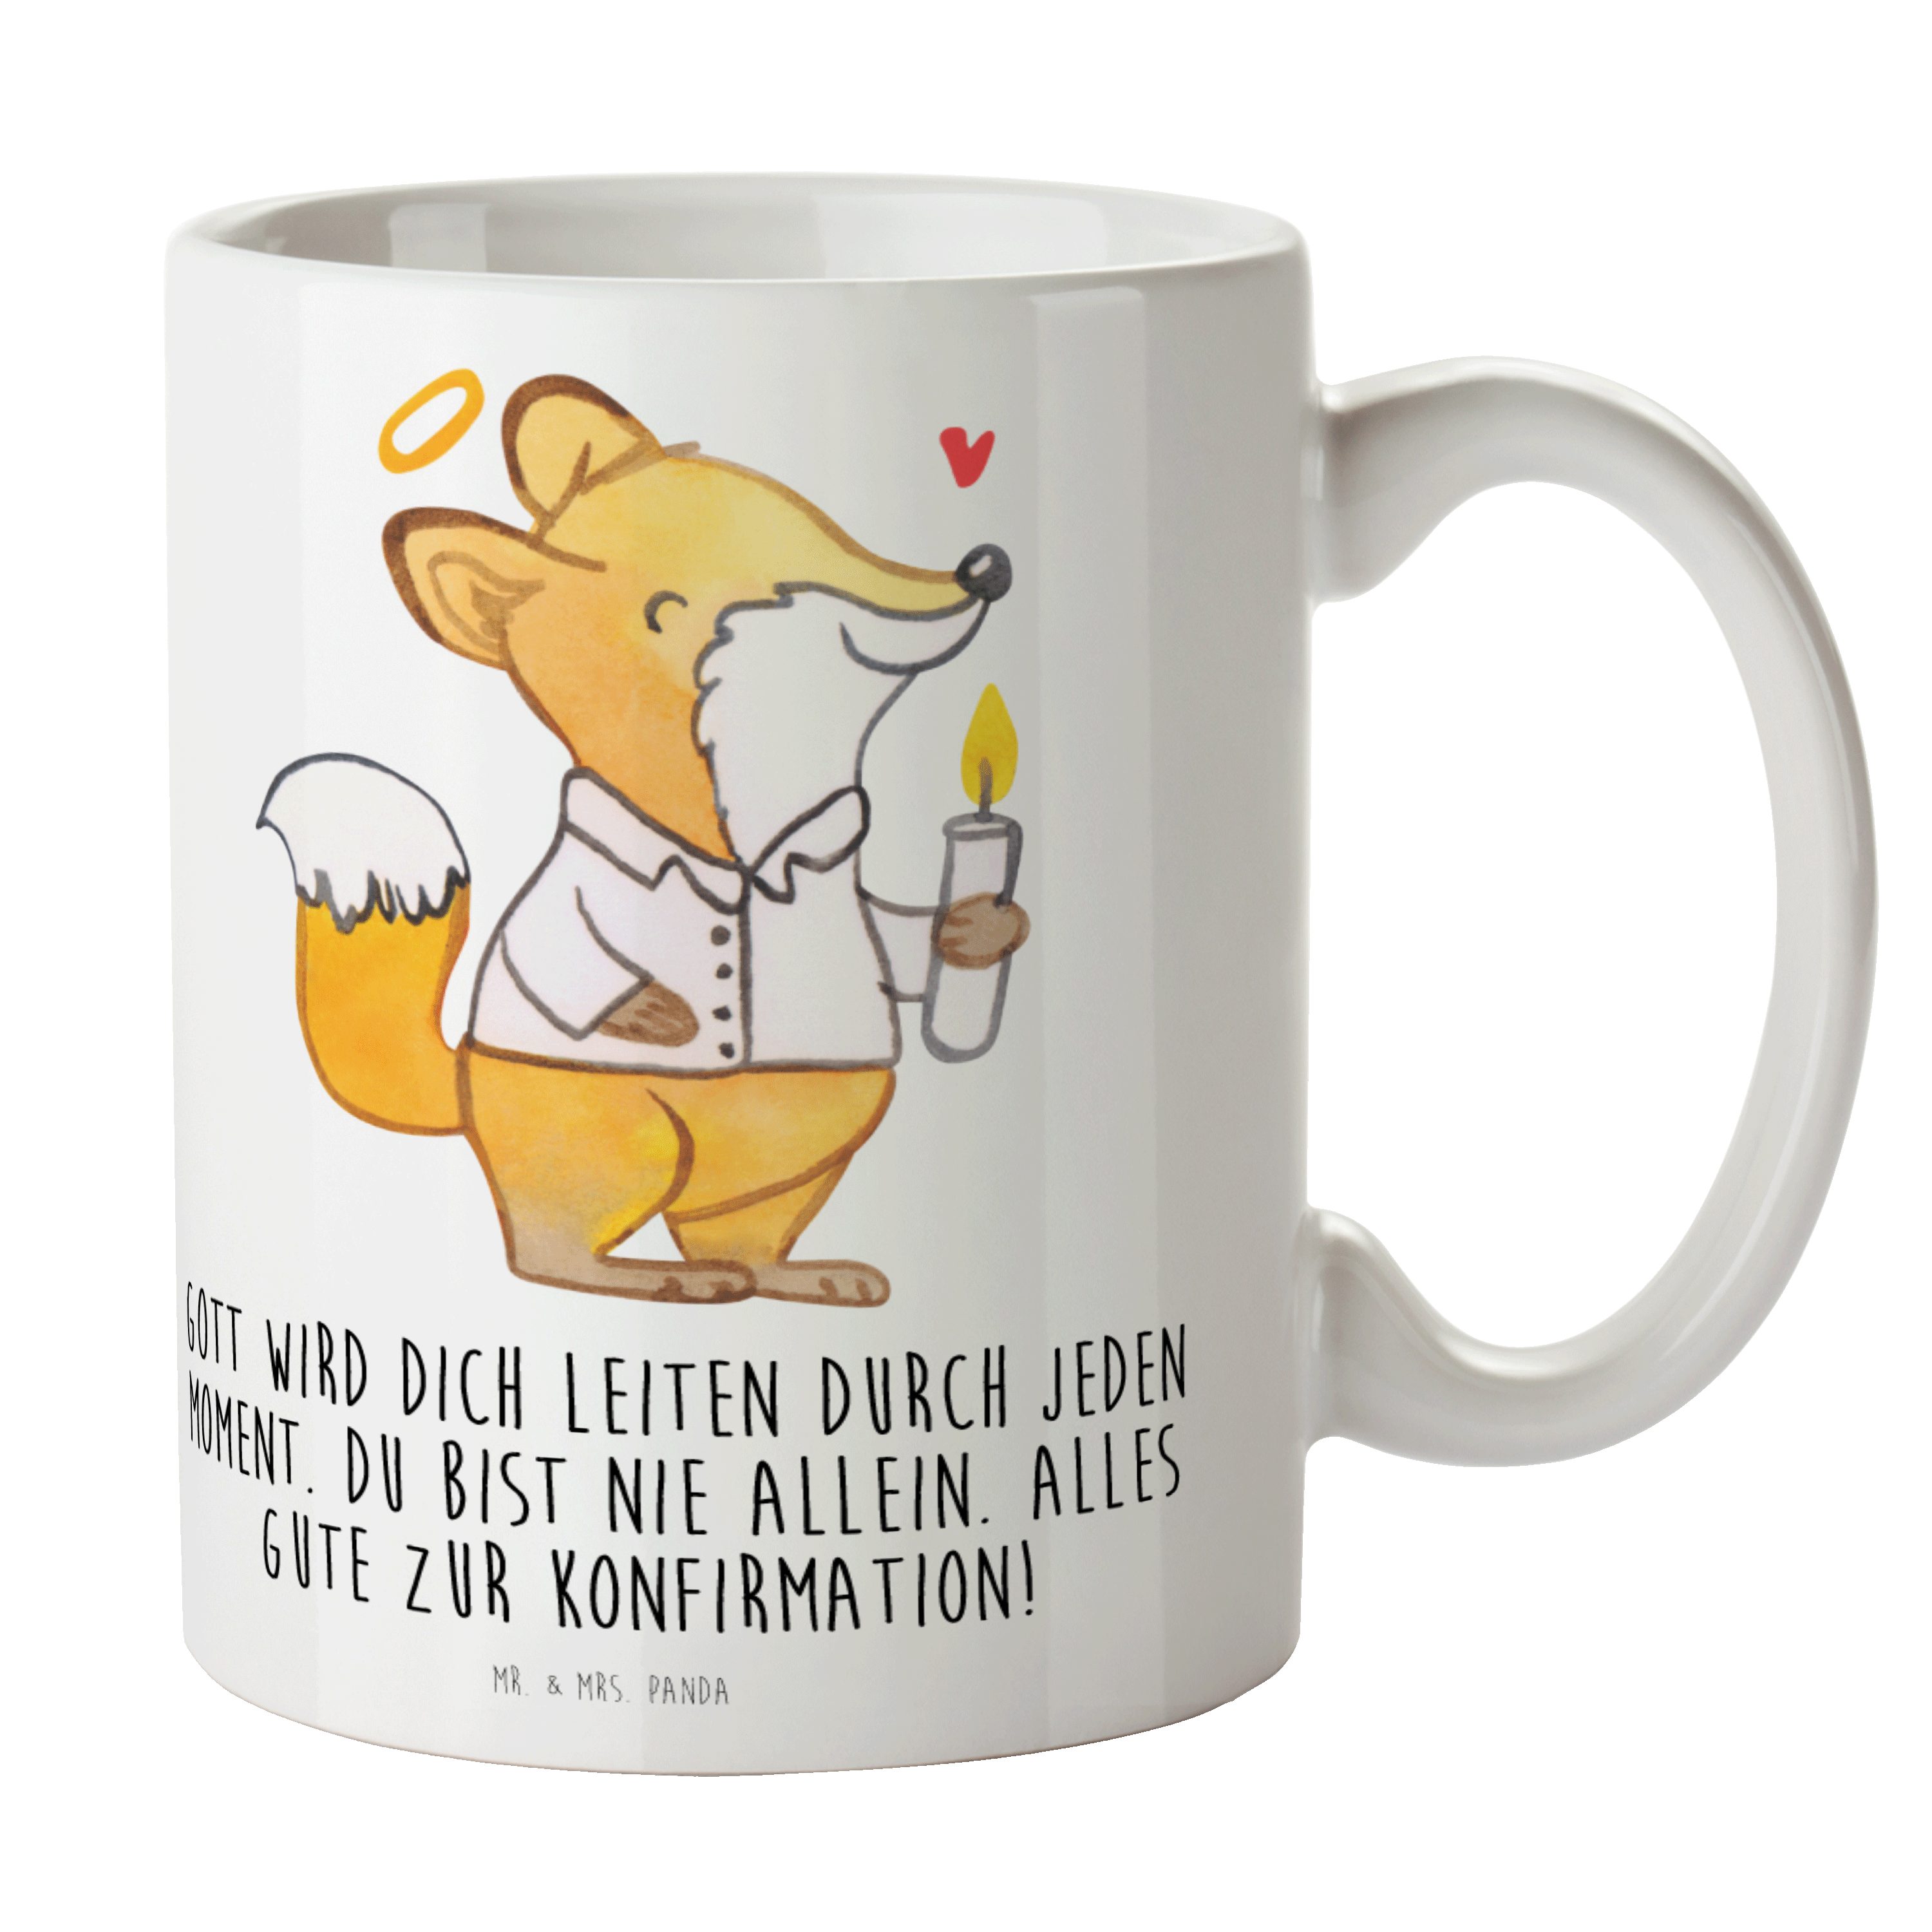 Mr. & Mrs. Panda Tasse Fuchs Konfirmation - Weiß - Geschenk, Gläubig, Gott, Jugendweihe, Tas, Keramik